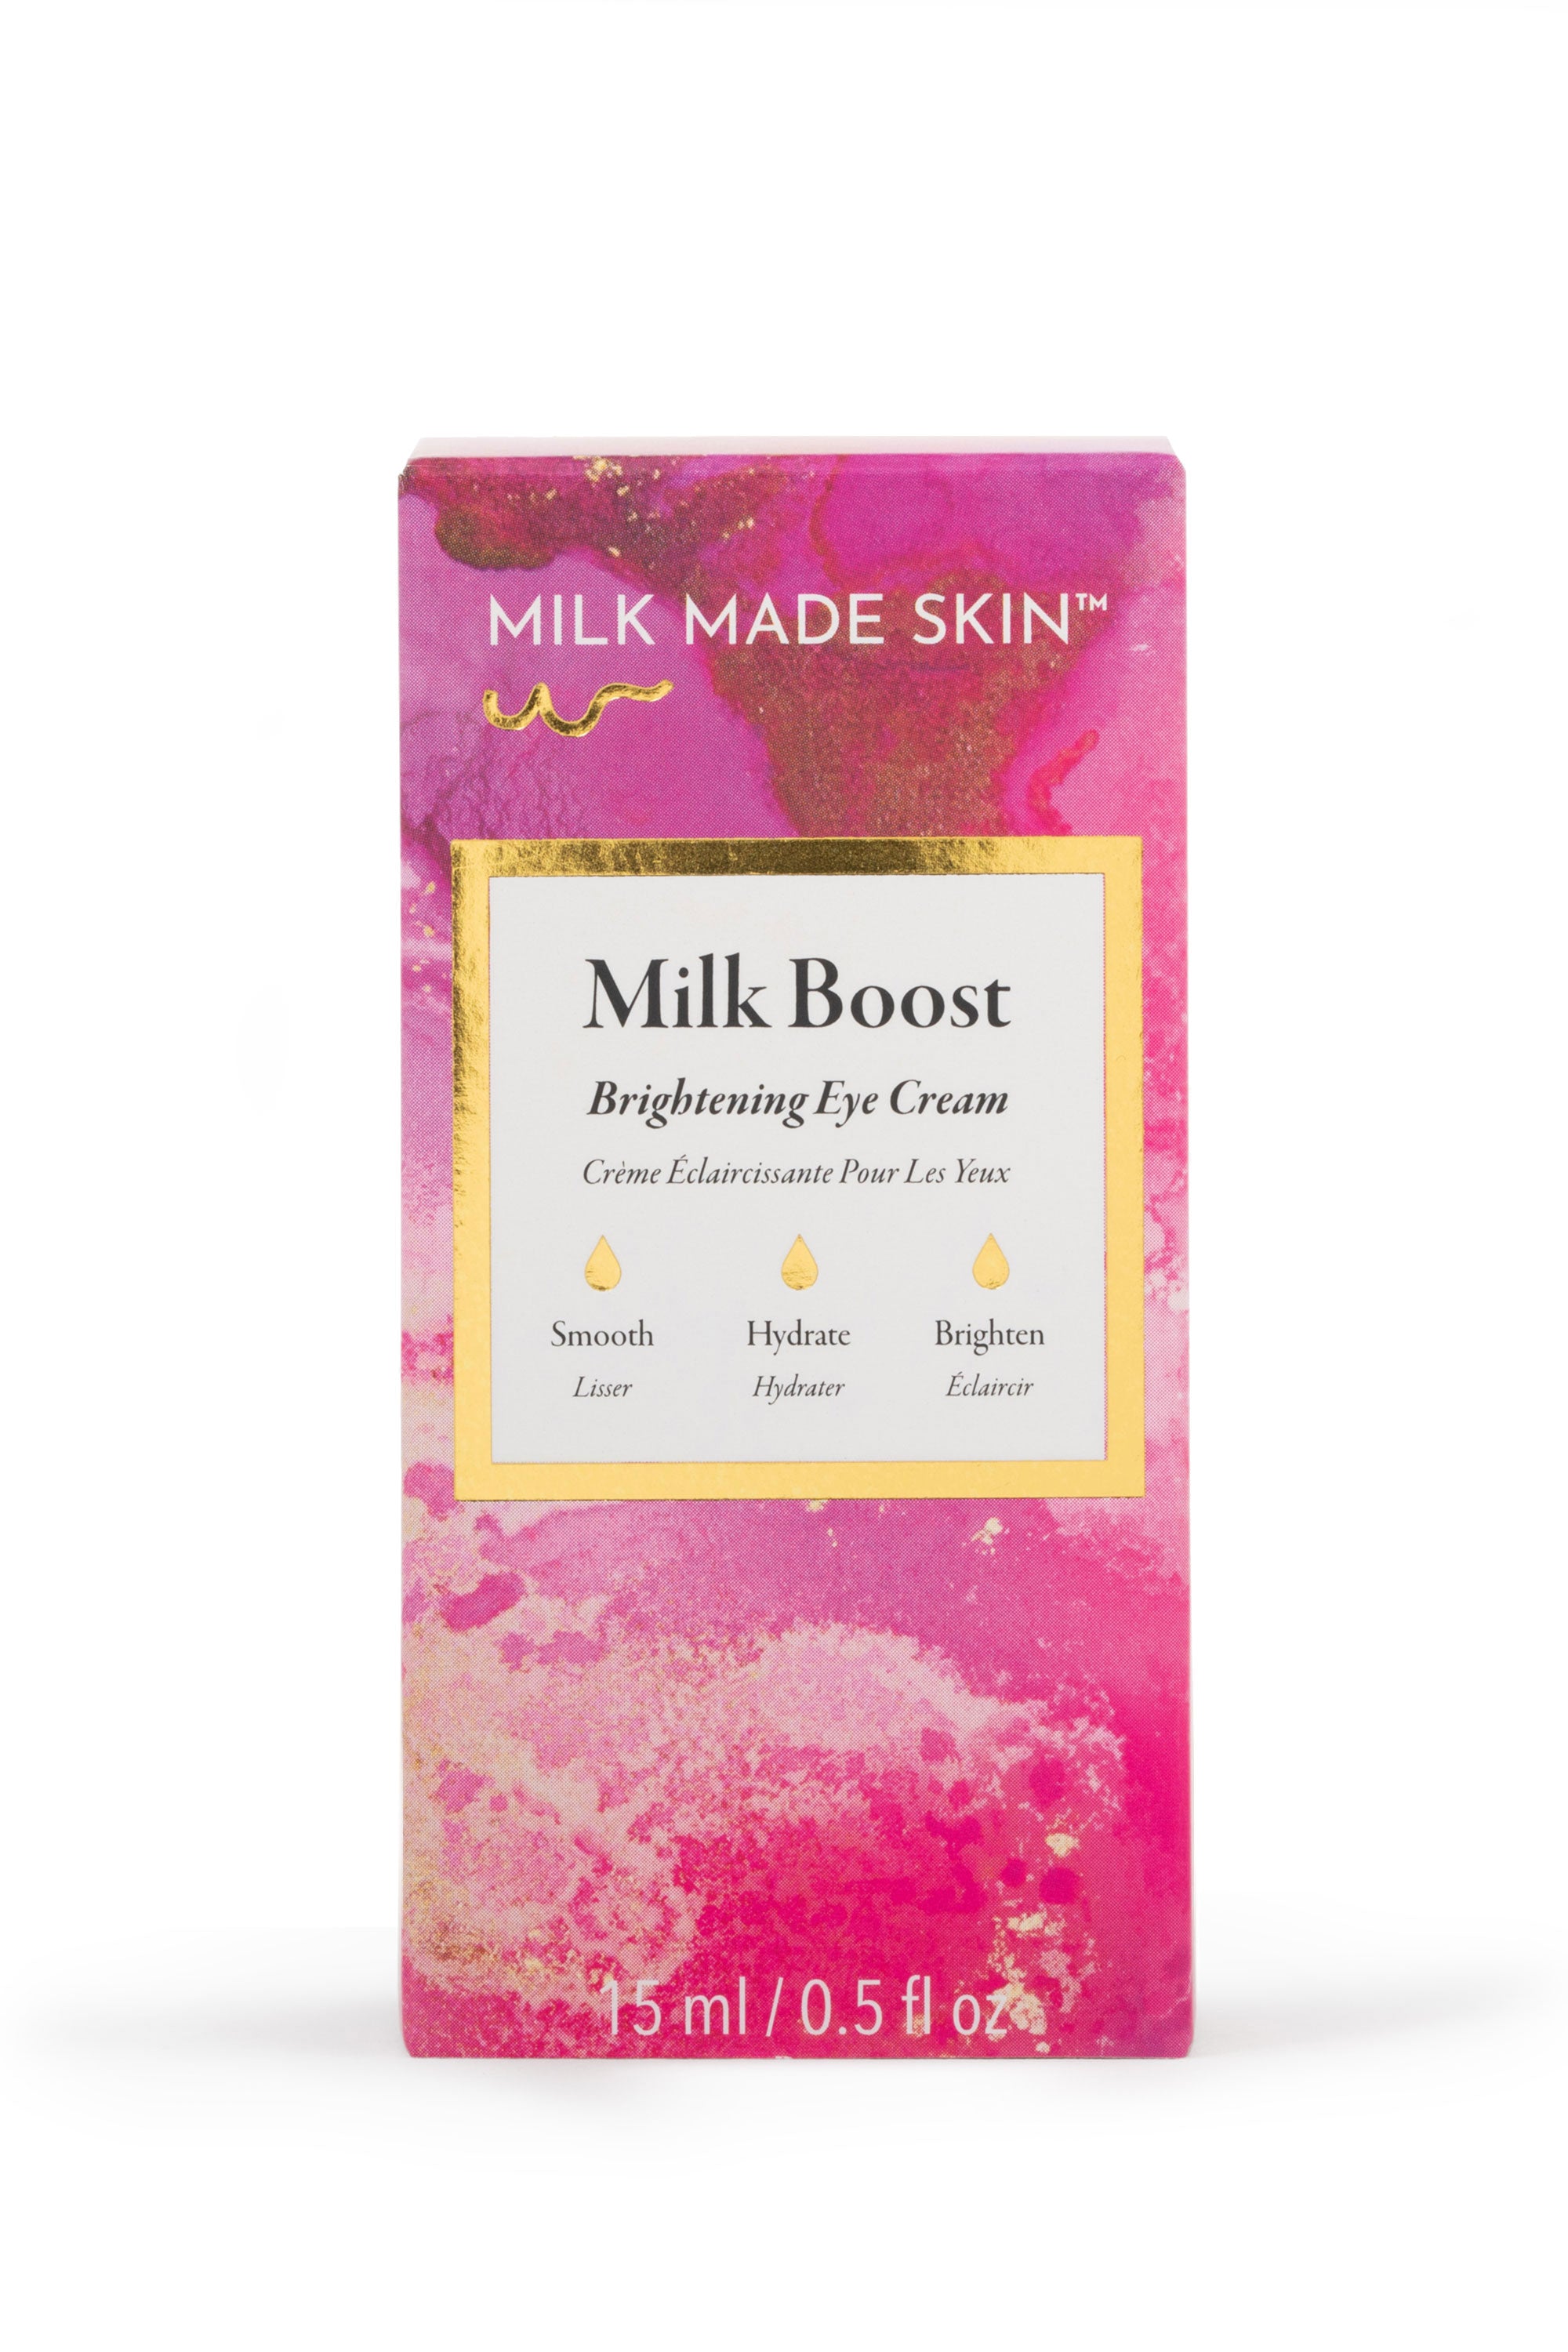 Milk Made Skin Milk Boost eye Cream box